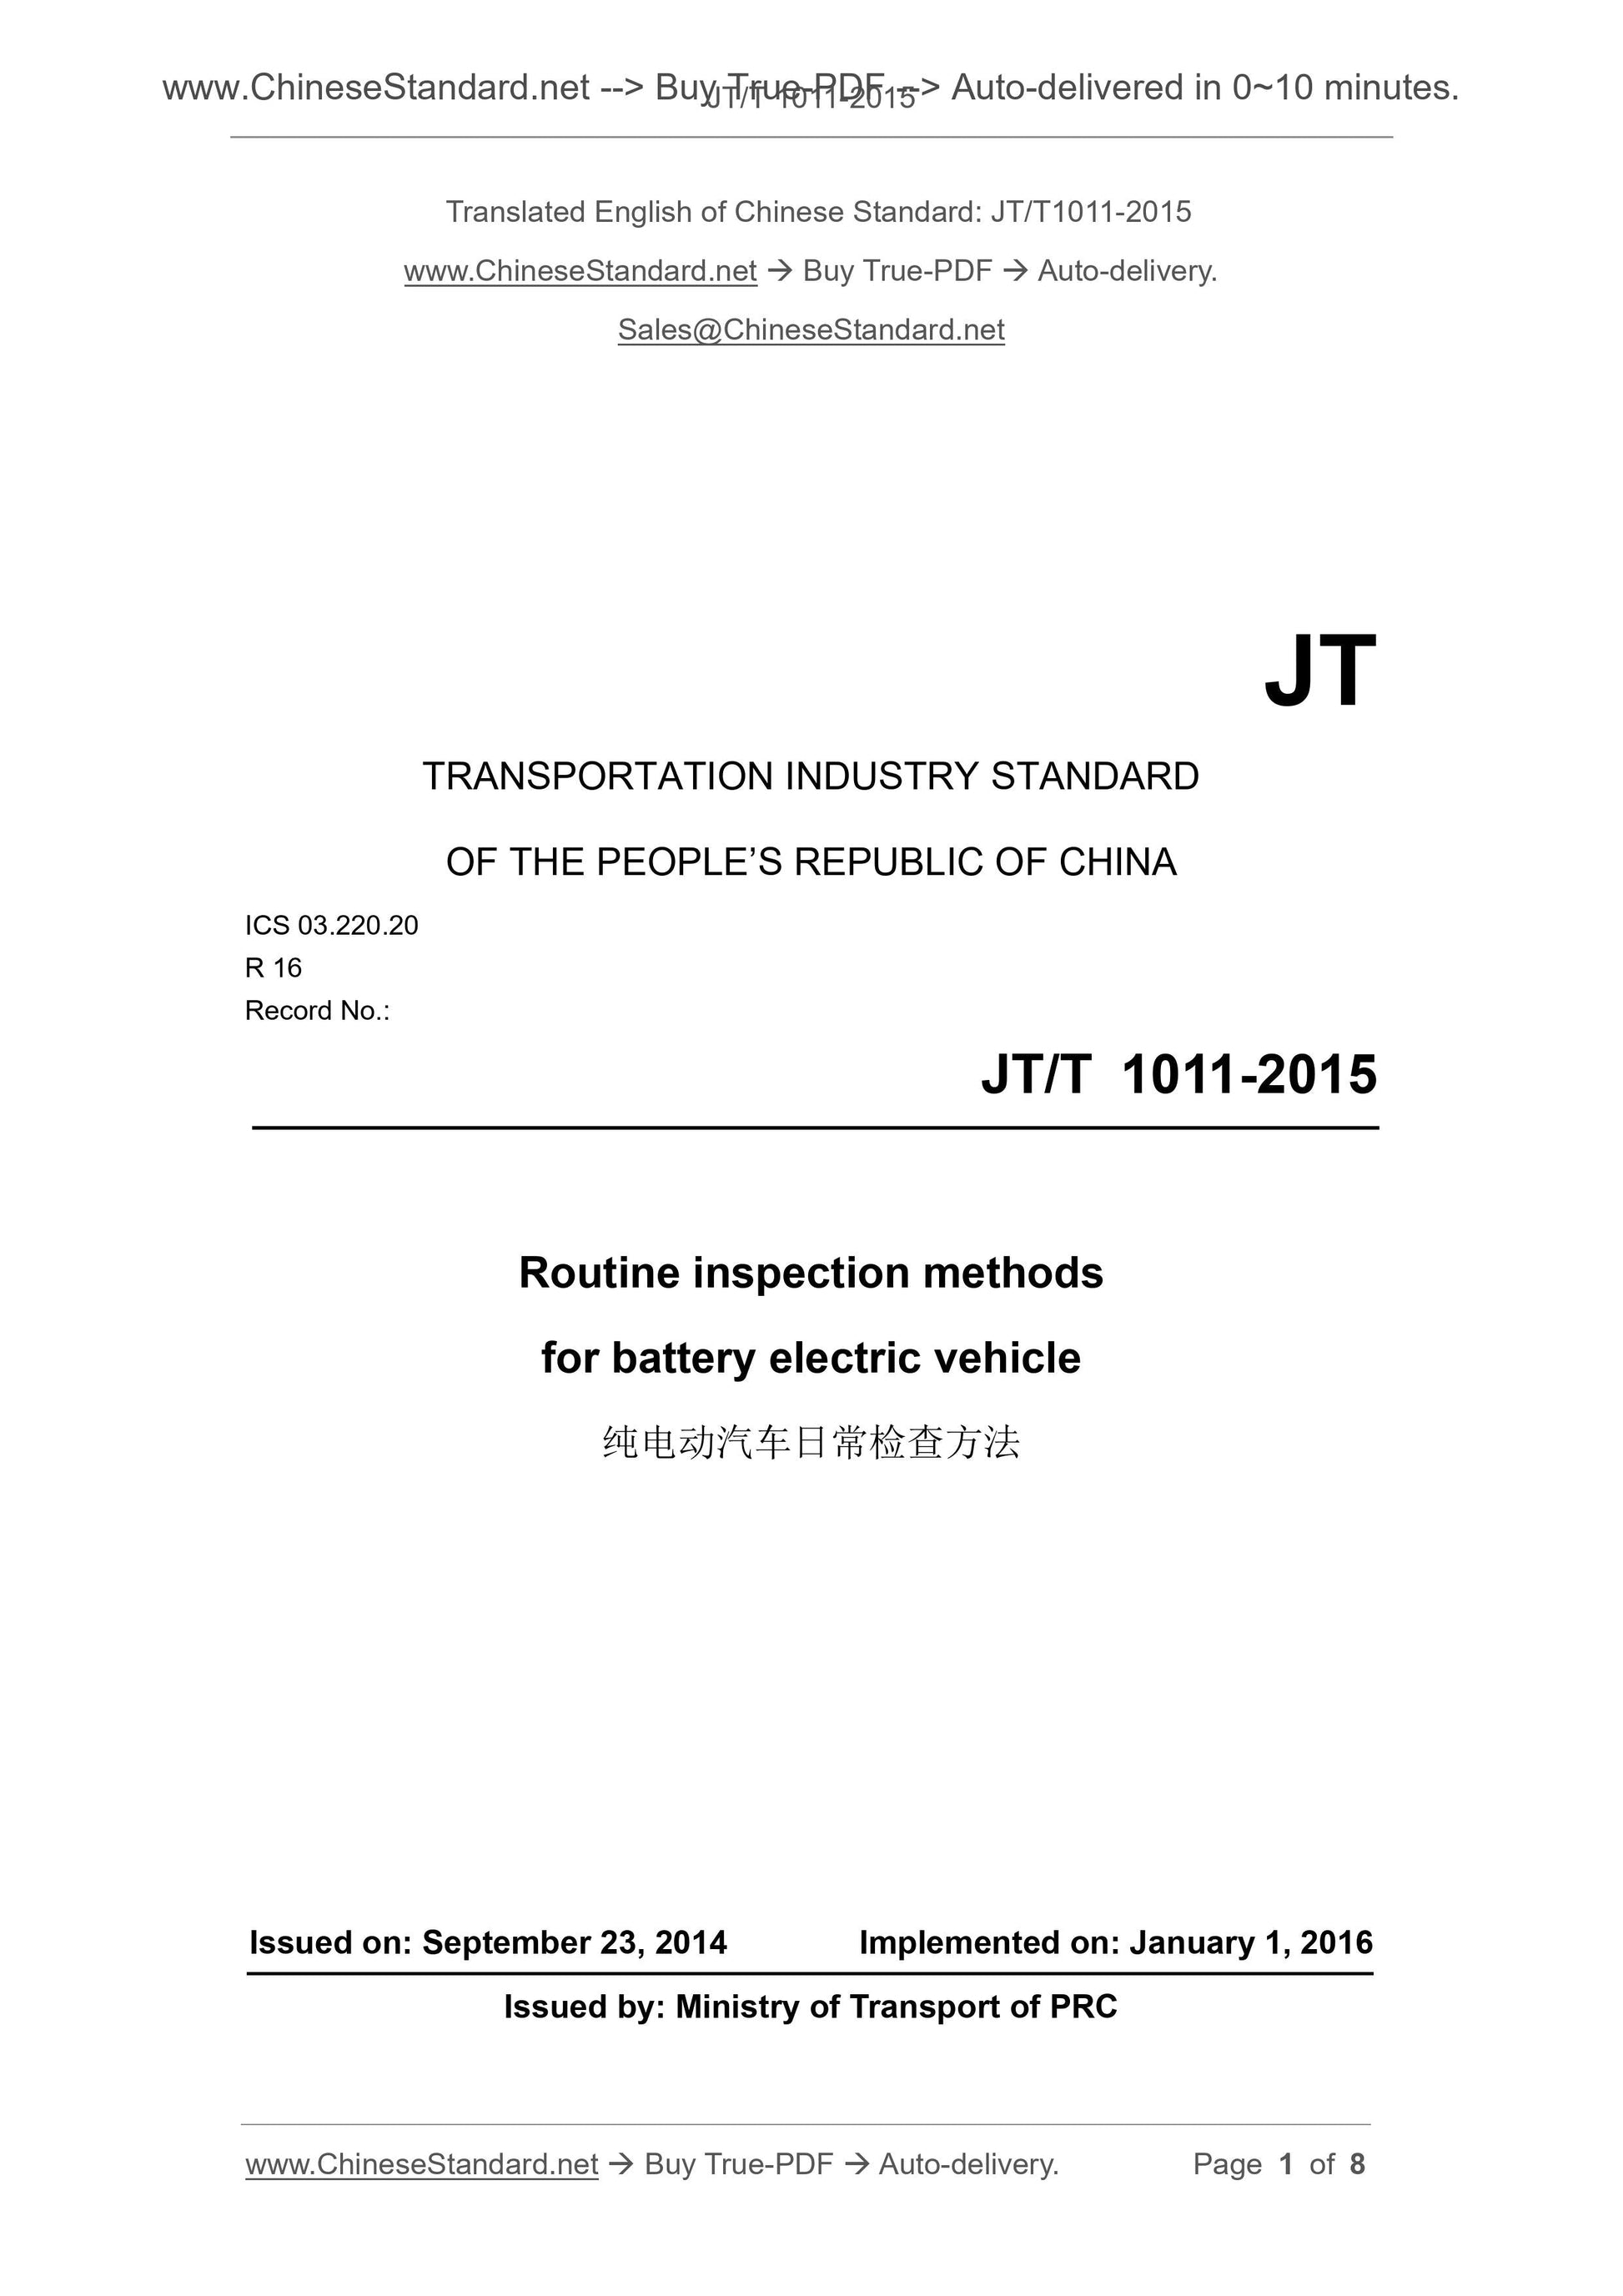 JT/T 1011-2015 Page 1